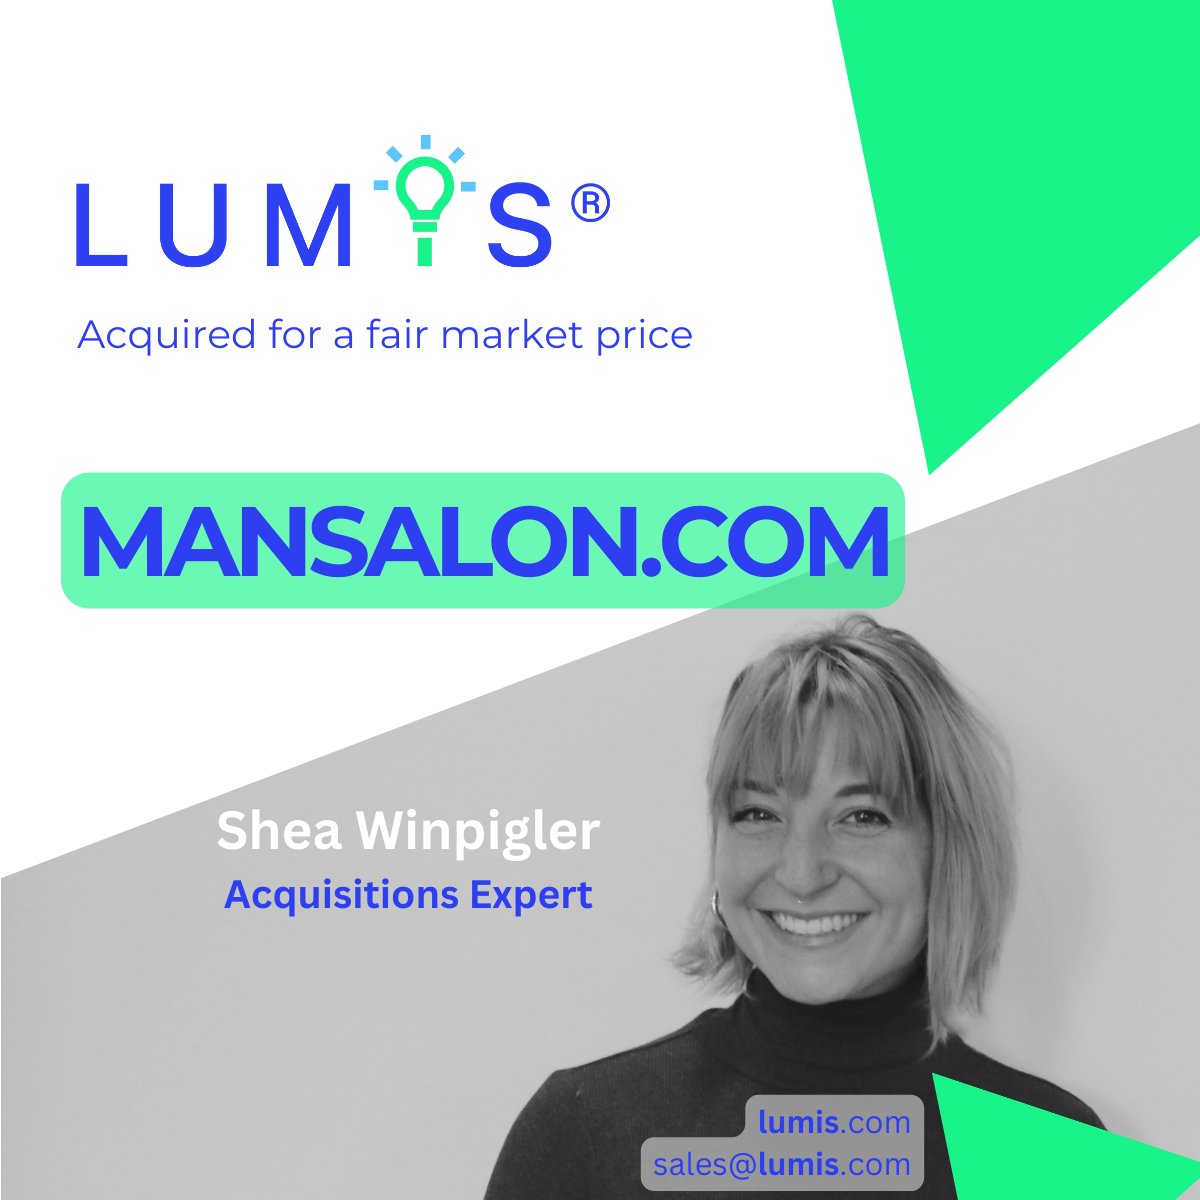 ManSalon.com has been acquired!

#Lumis